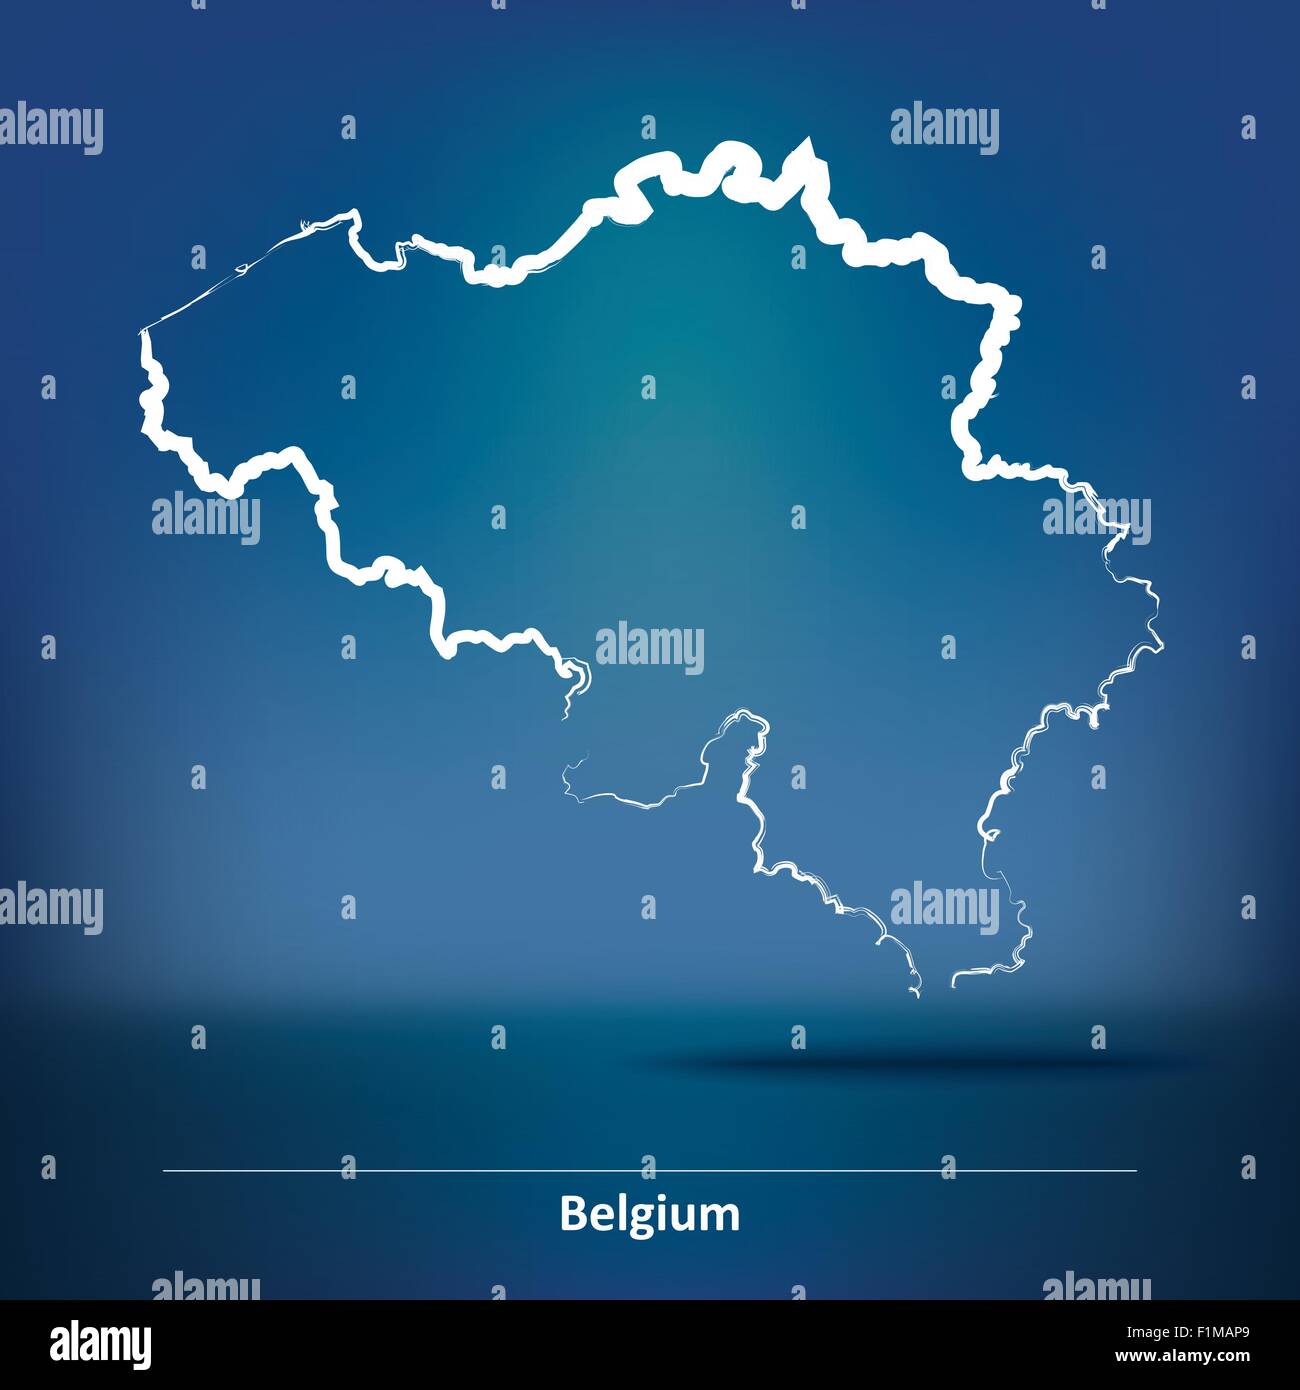 Karte von Belgien - Vektor-Illustration Doodle Stock Vektor